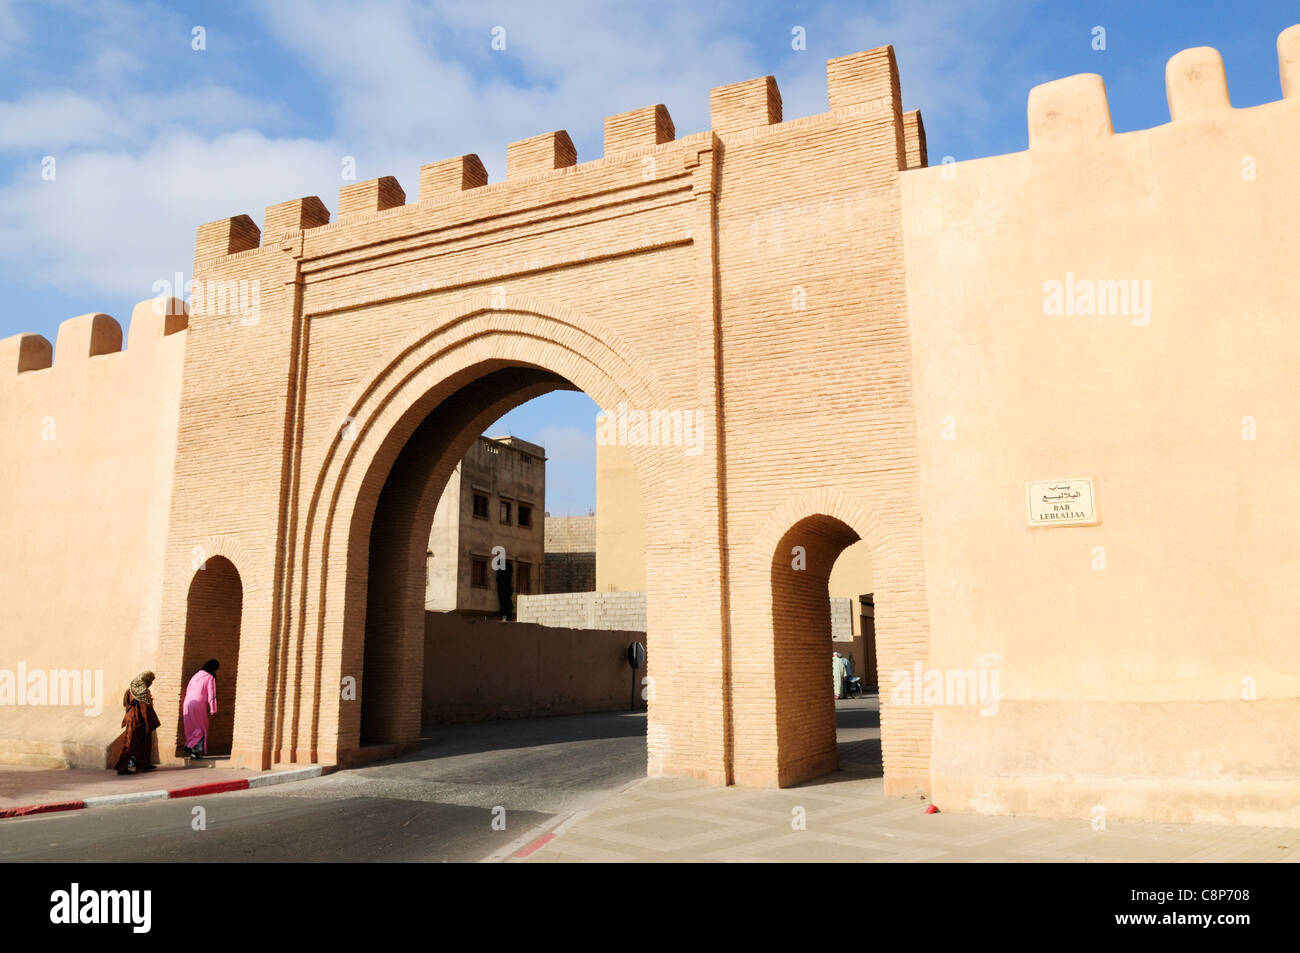 Bab Leblaliaa, Taroudannt, Morocco Stock Photo